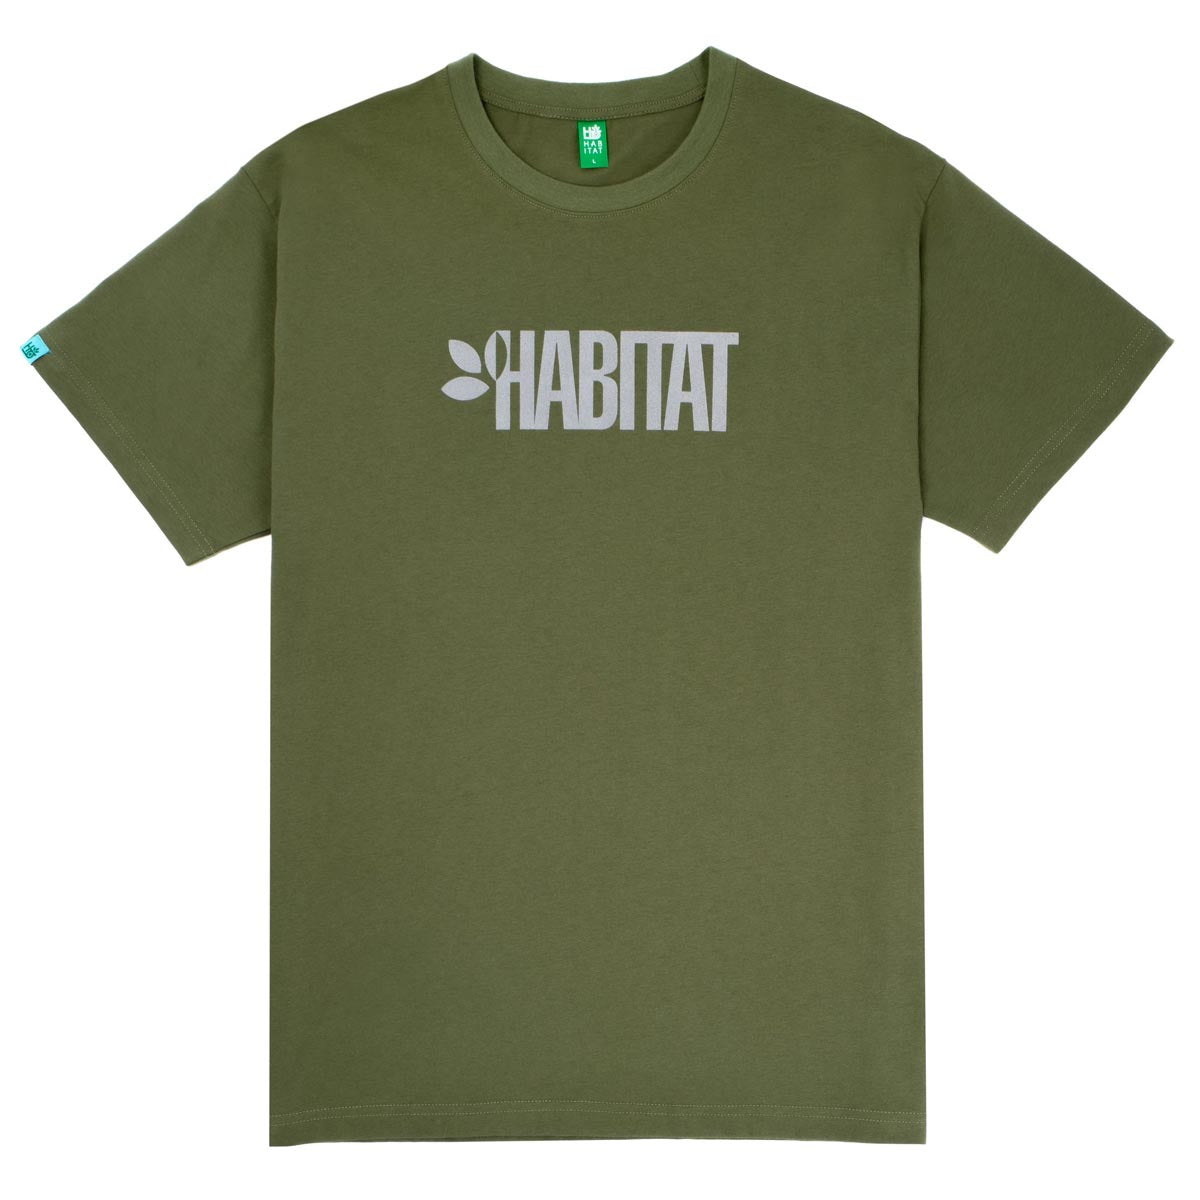 Habitat Apex T-Shirt - Army image 1